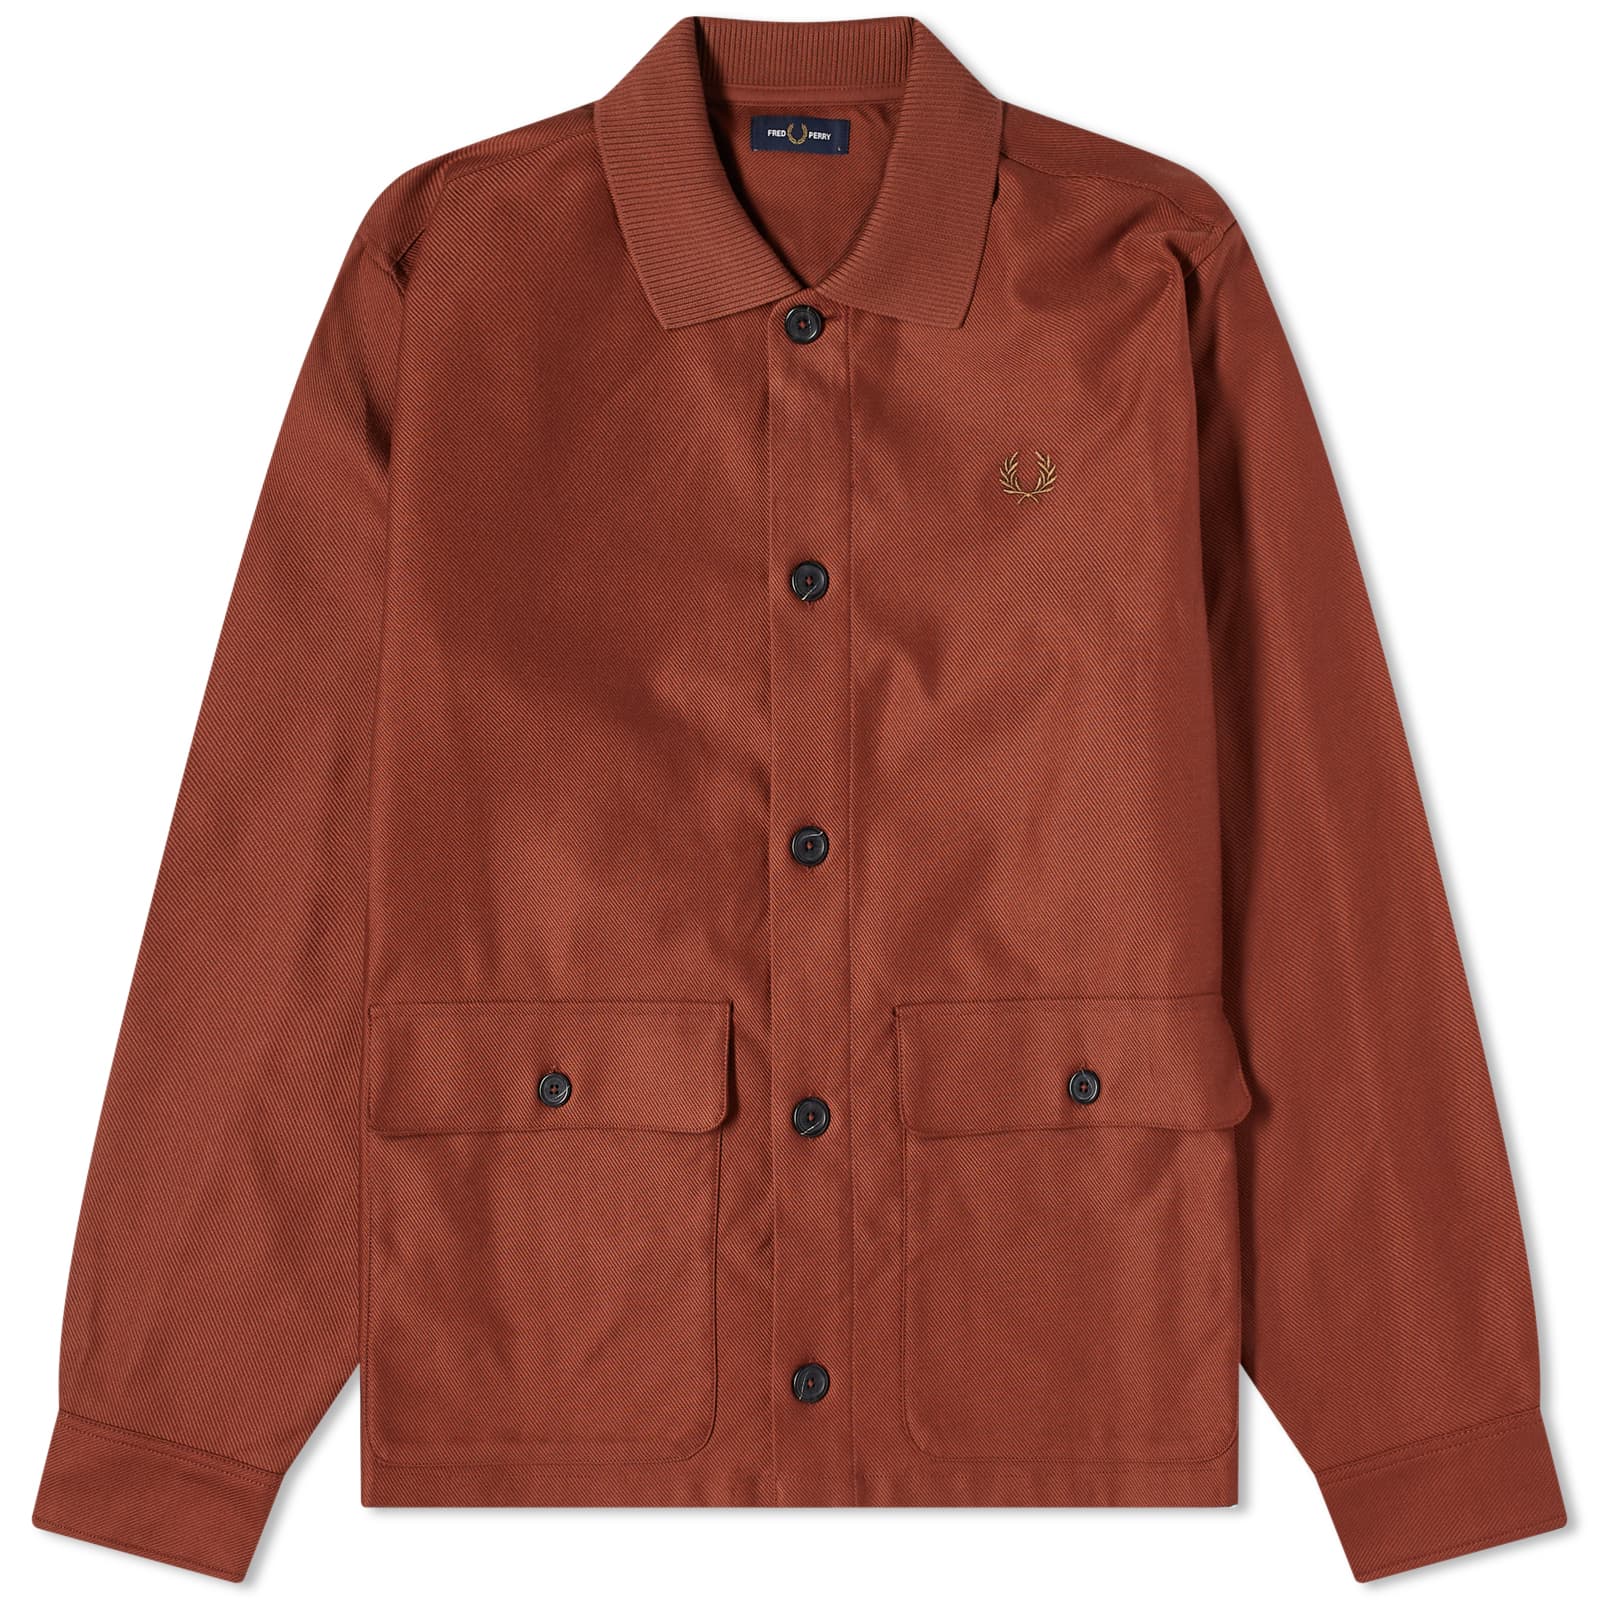 Куртка рубашка Fred Perry Utility Pocket, коричневый джемпер шерстяной вязки в рубчик с вышитым логотипом fred perry цвет oatmeal